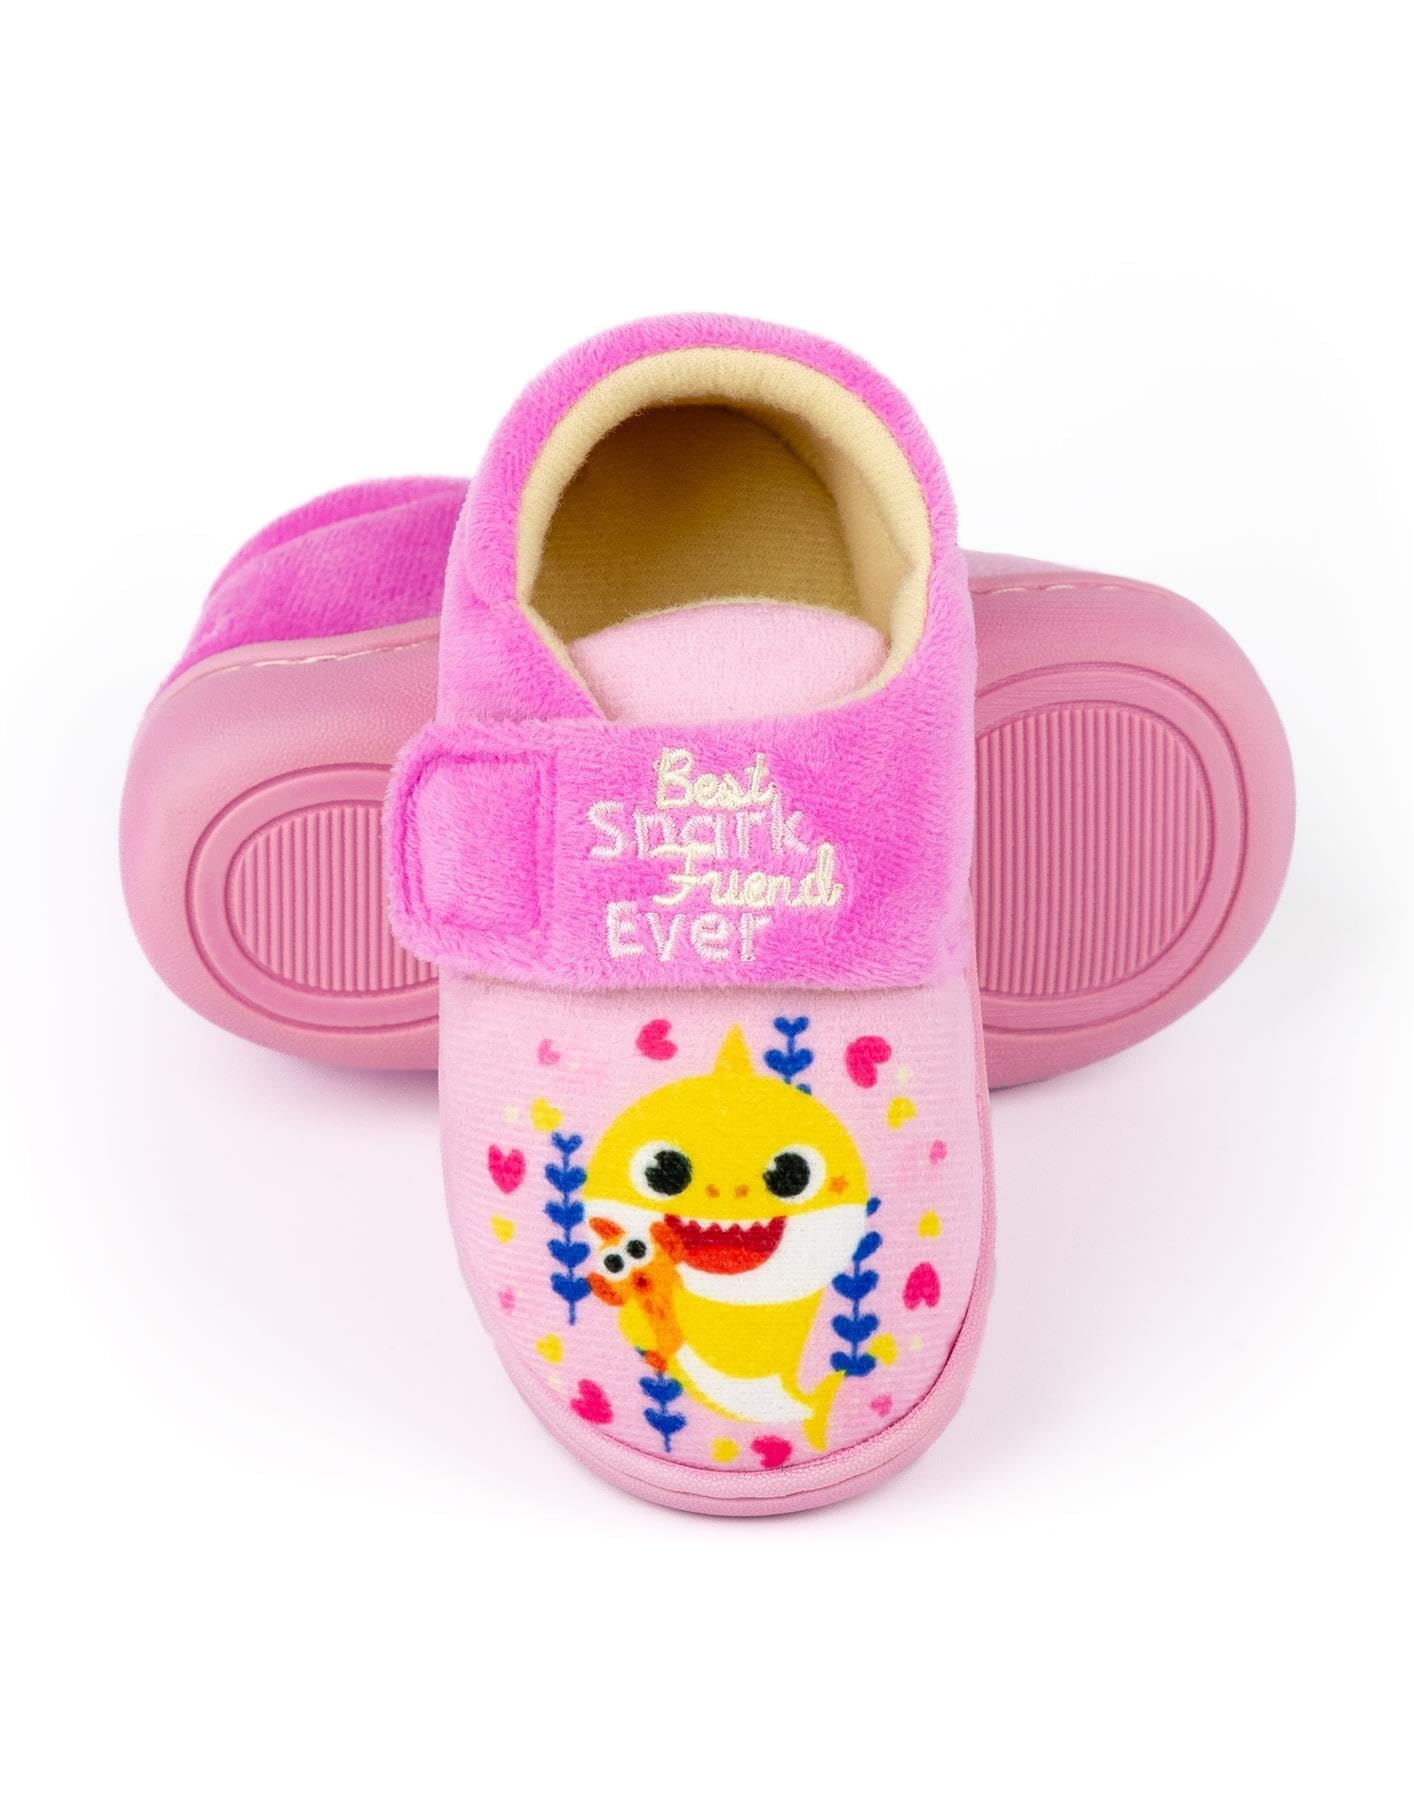 Baby Shark Girls Slippers | Kids Pink Best Shark Friend Ever Footwear with Adjustable Strap | Slip On House Shoes Loungewear